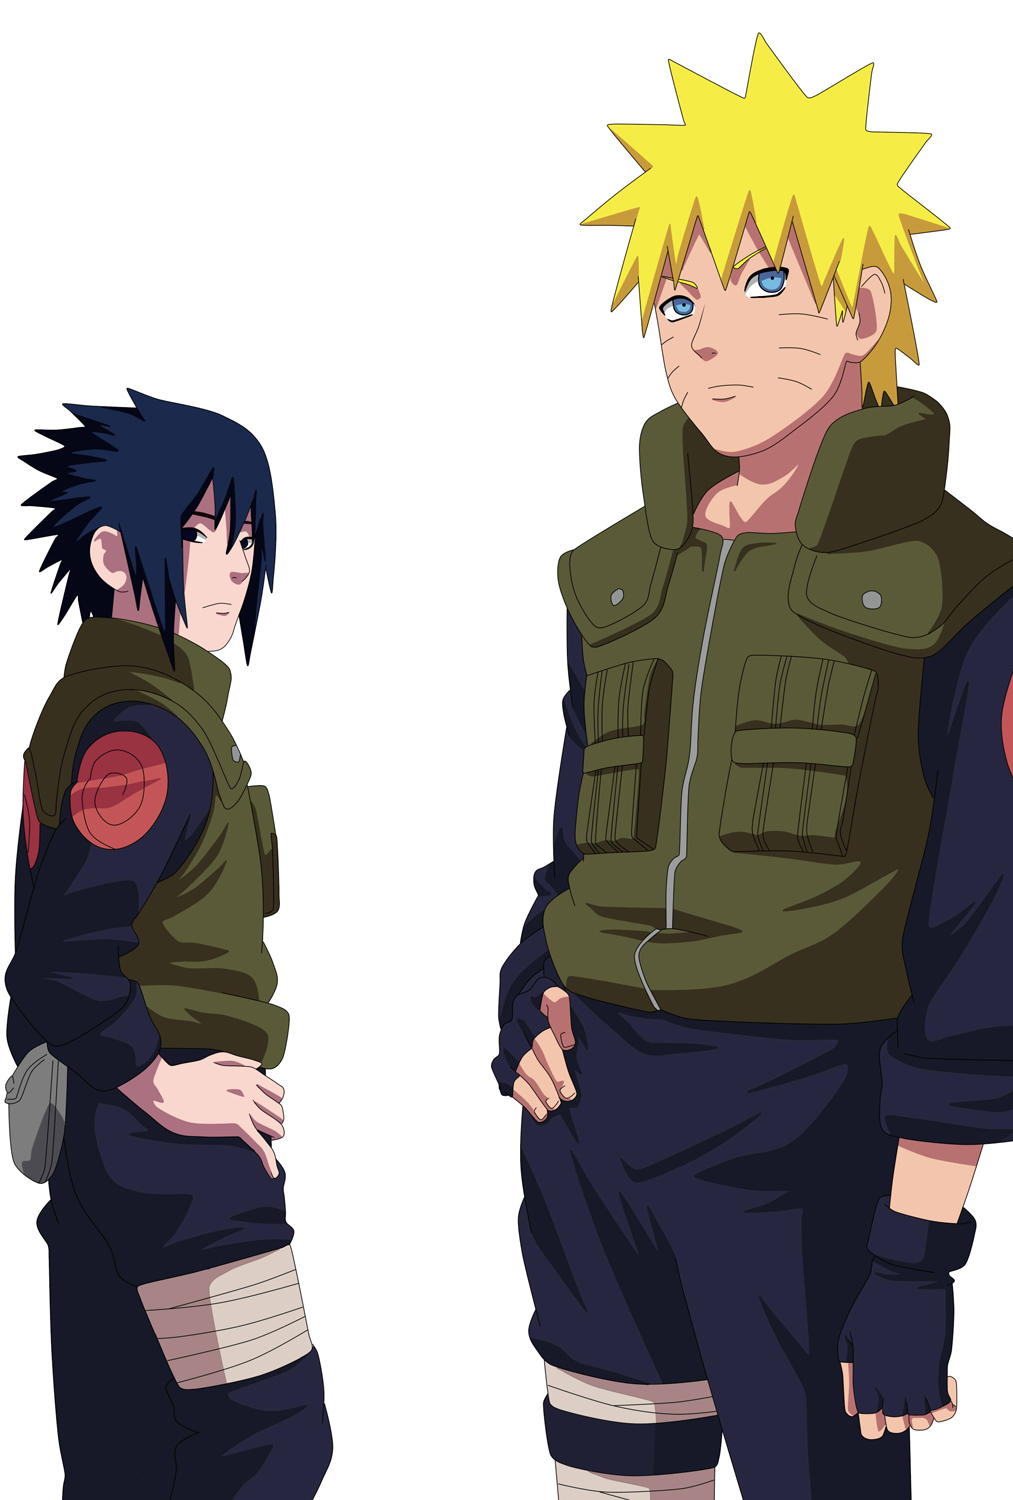 Naruto and Sasuke by kraddy07 on DeviantArt